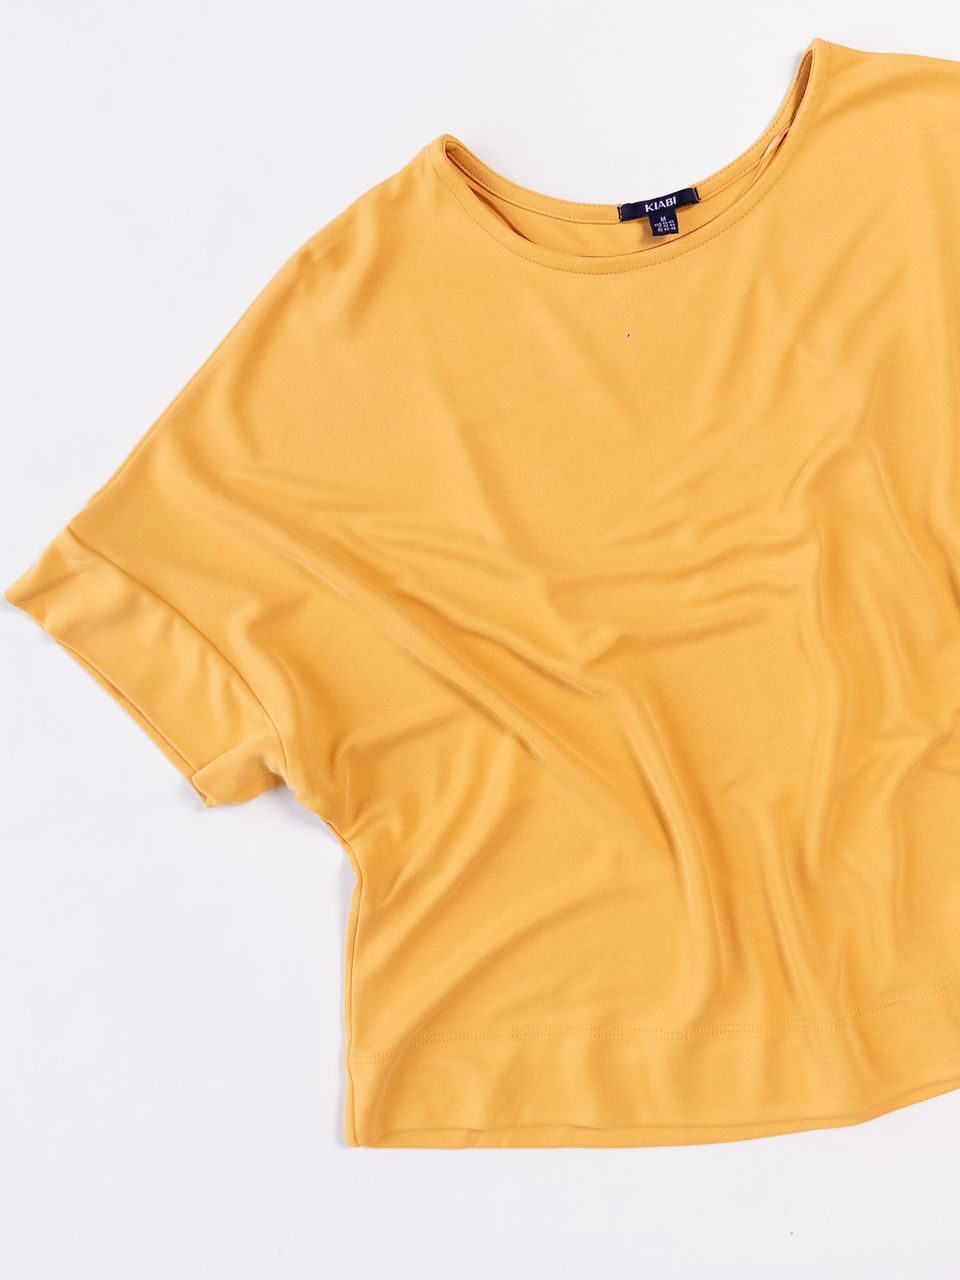 Блуза трикотажная свободного кроя цвет желтый размер EUR М 38-40 (rus 44-48) KIABI